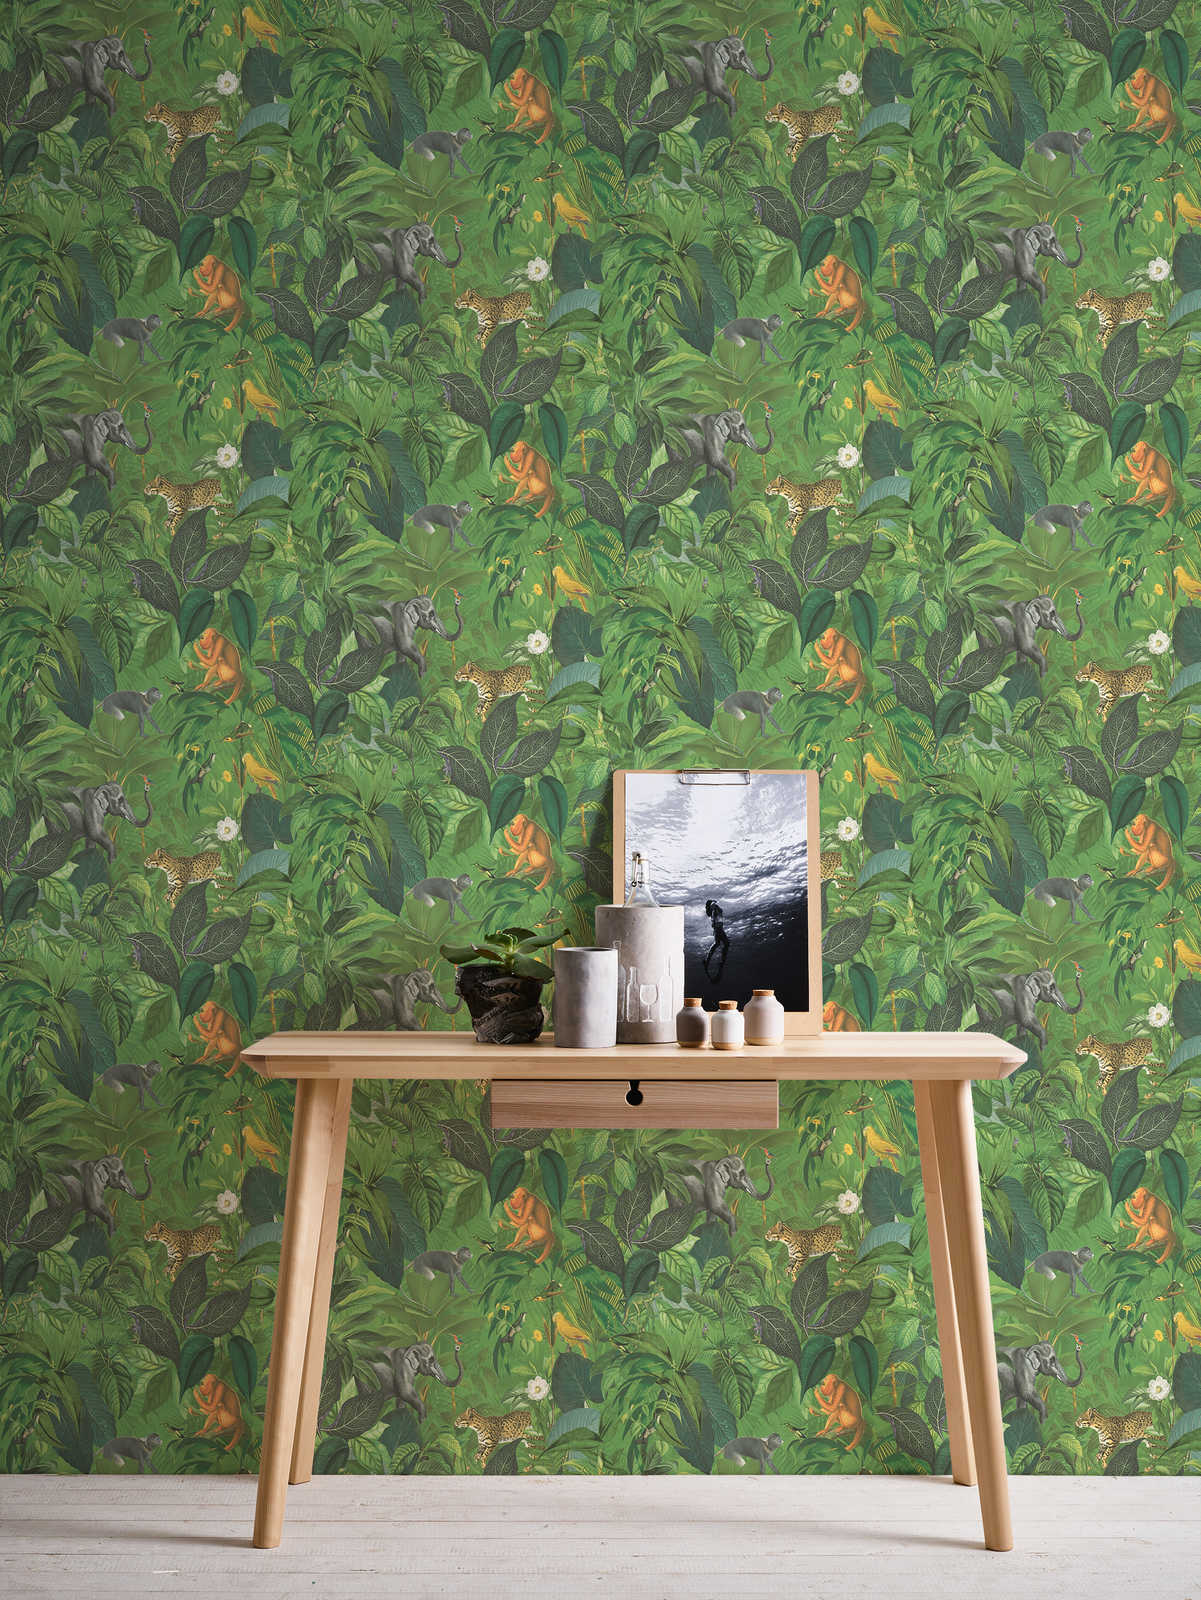             Jungle wallpaper with animals, children motif - green
        